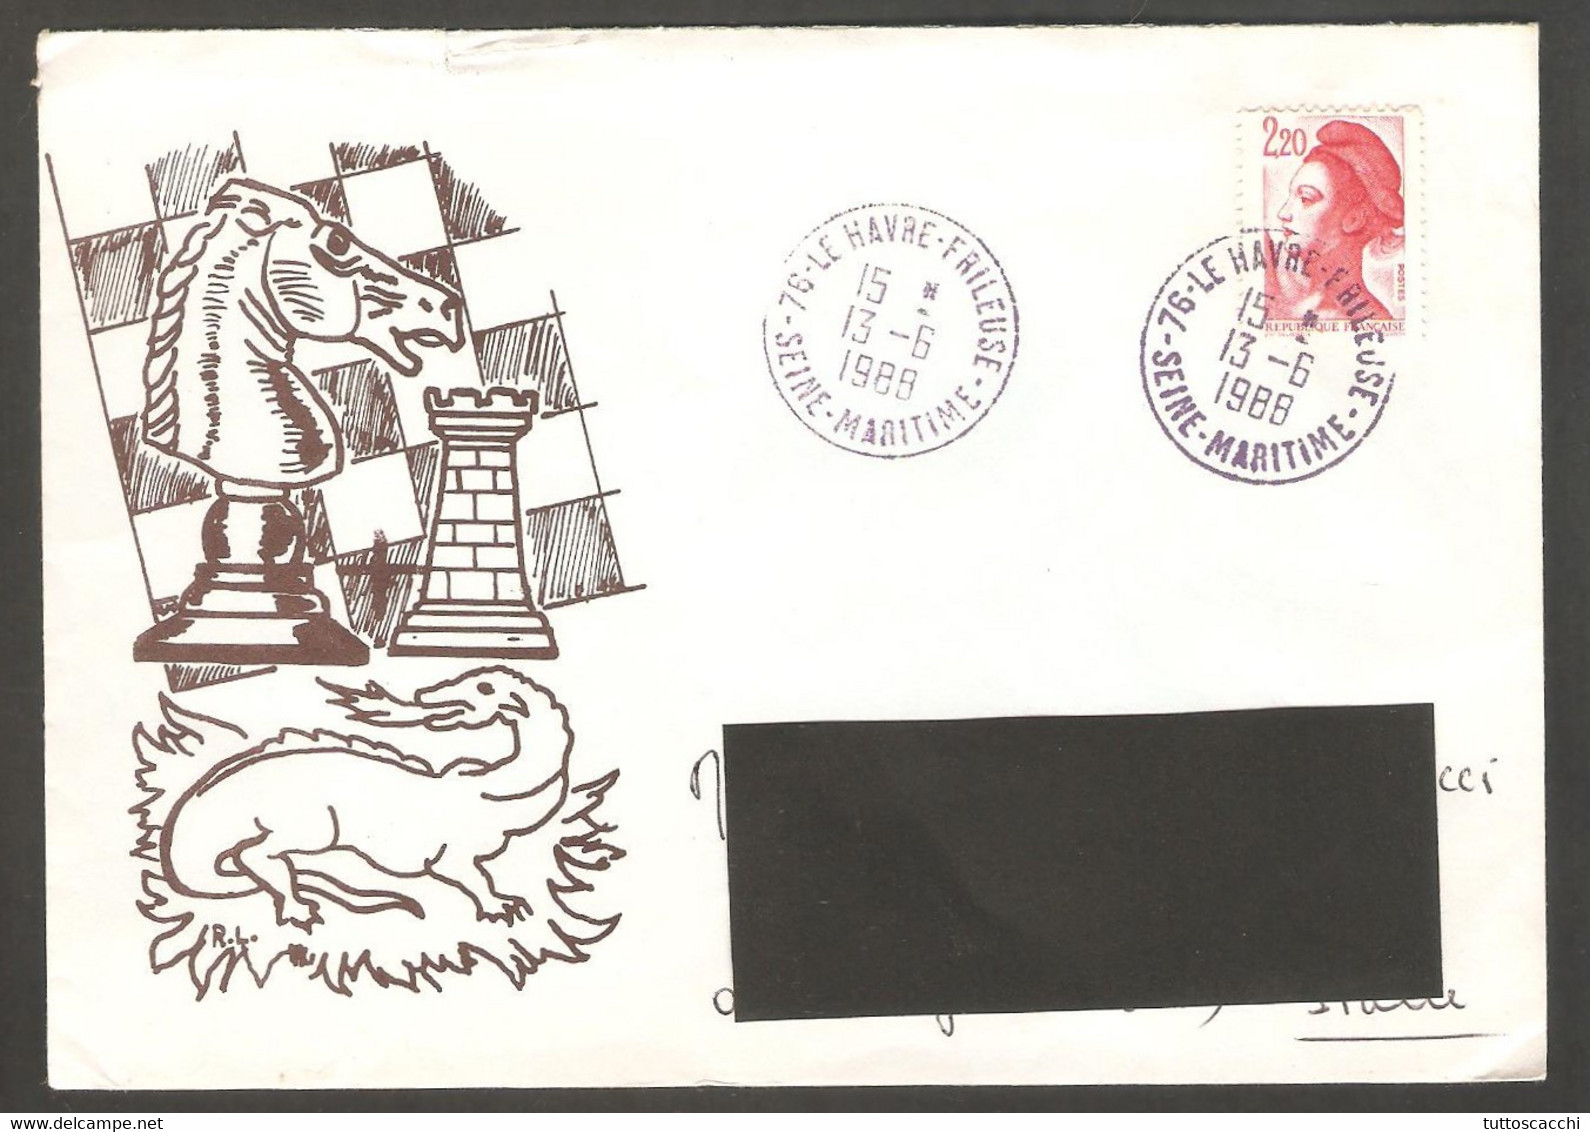 France 1988 Le Havre - Chess Commemorative Envelope, Traveled - Echecs